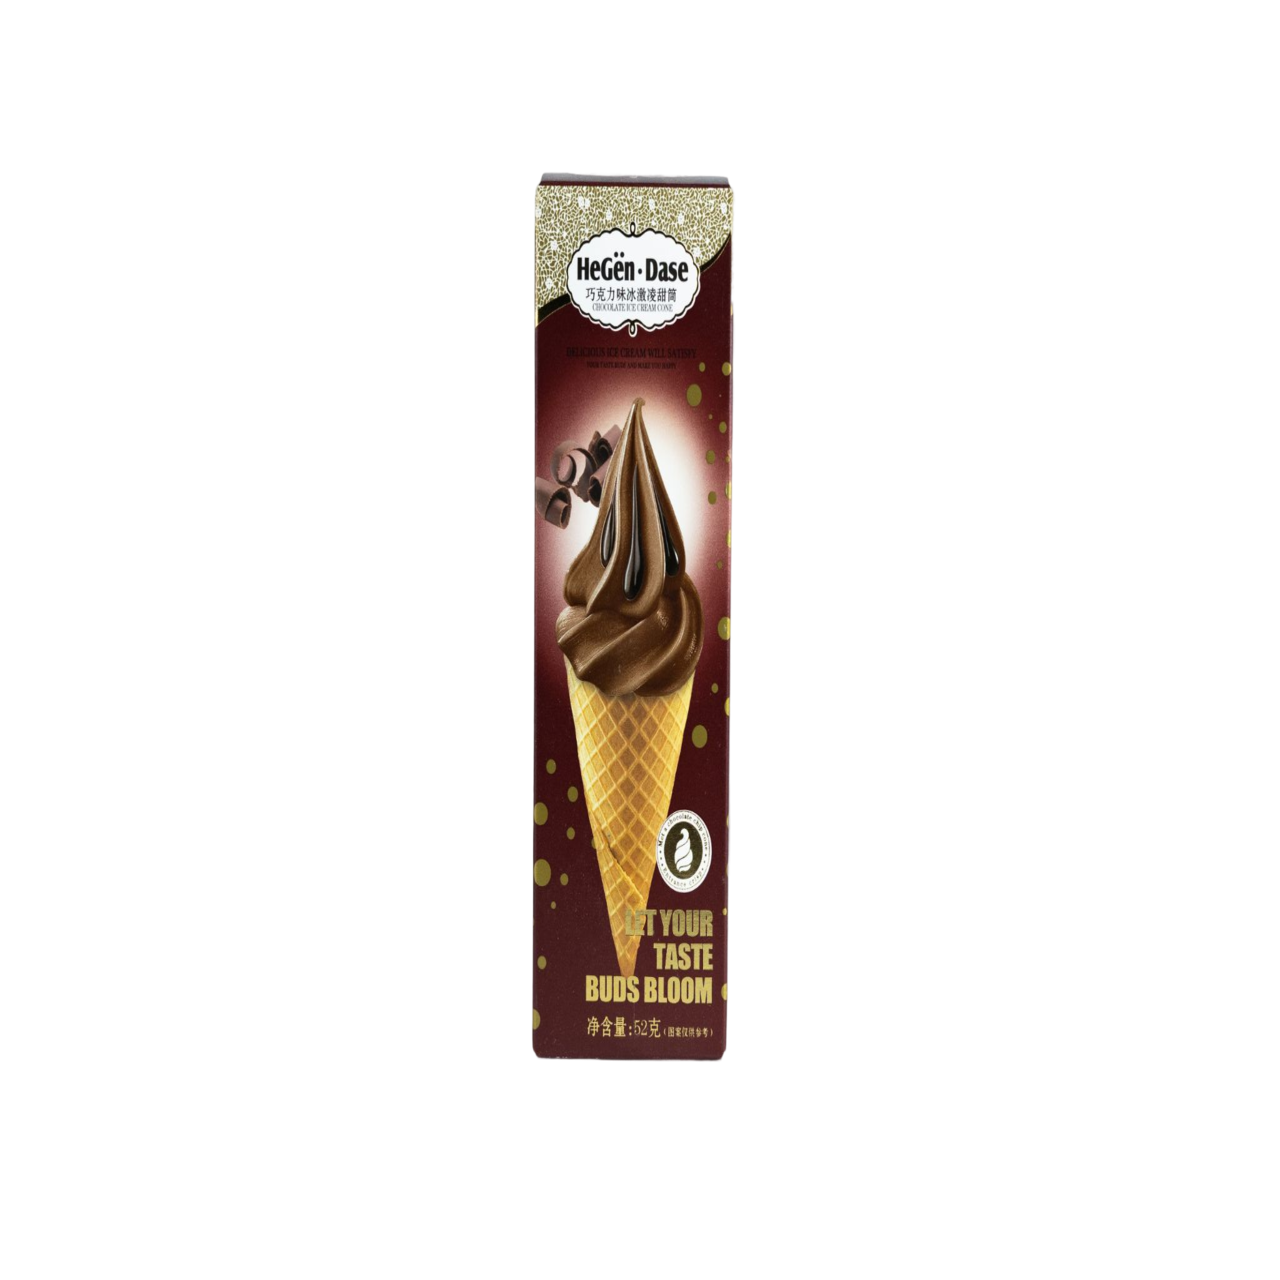 Hegen Dase - ice cream cone chocolate flavor